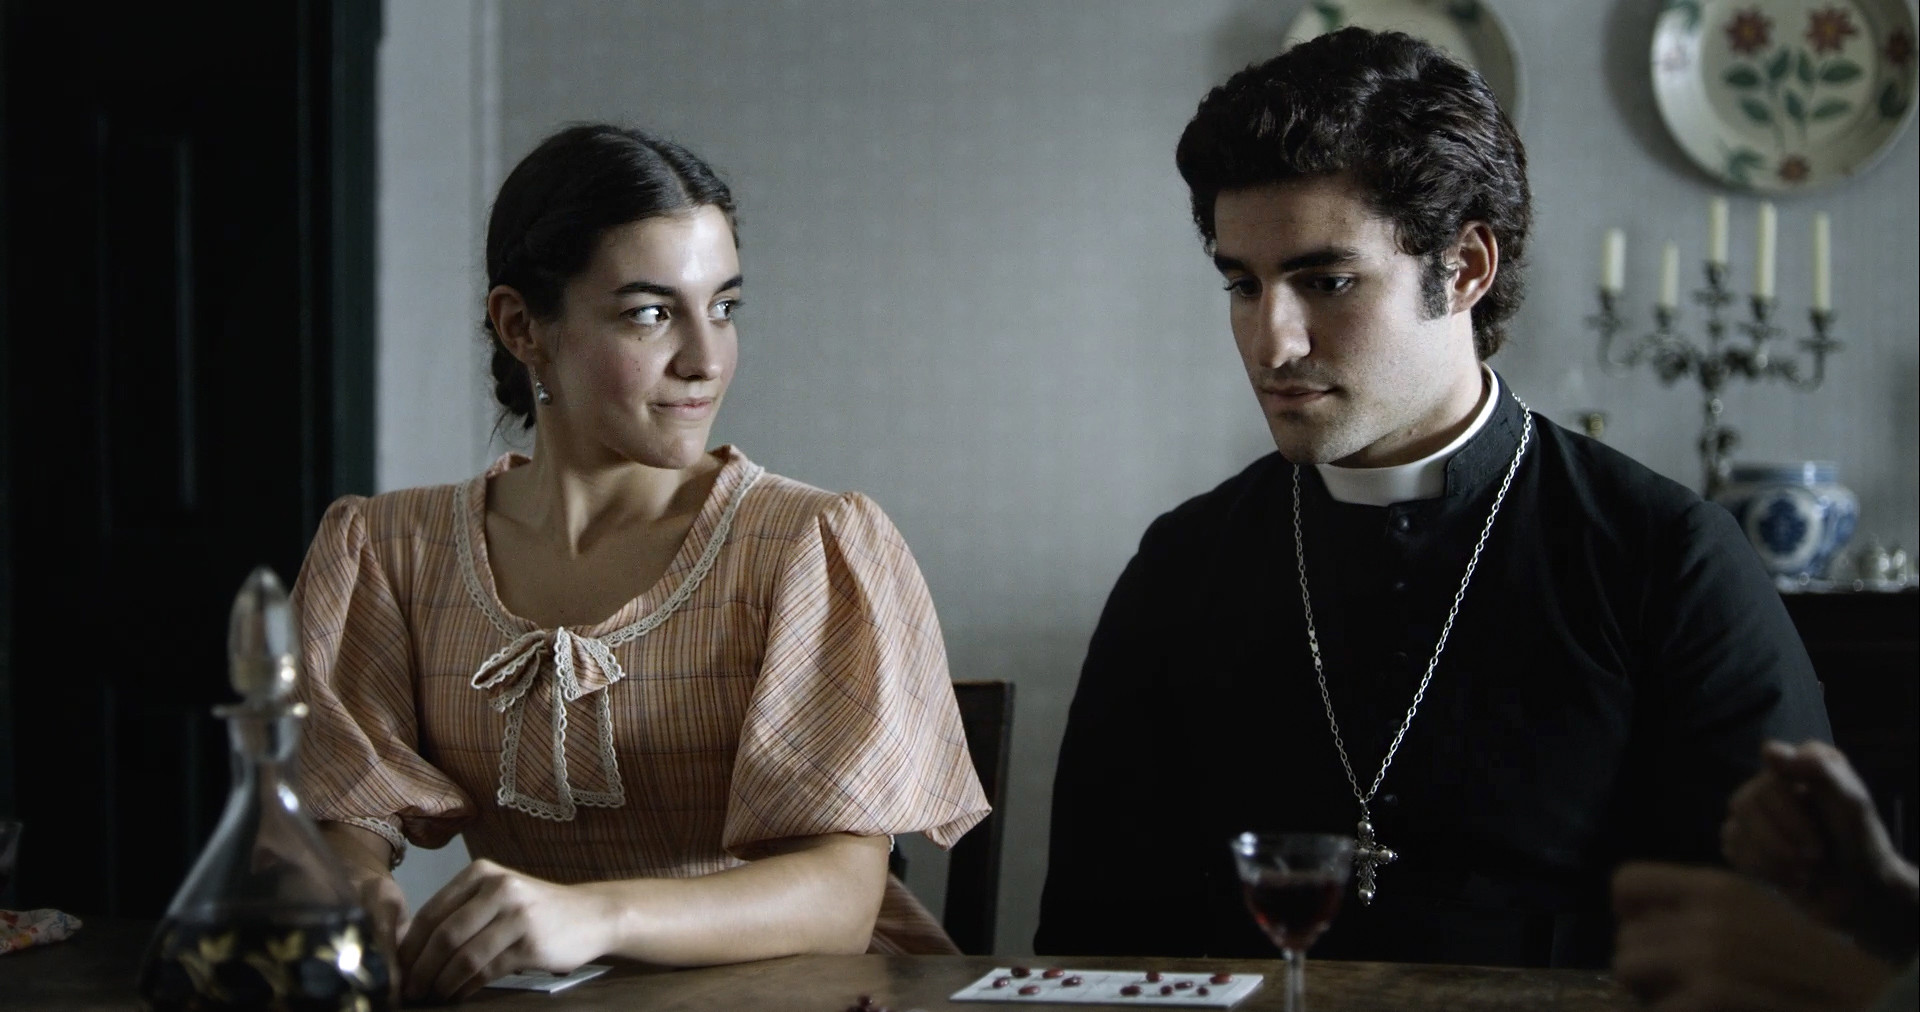 Bárbara Branco no papel de Amélia e José Condessa no papel de Padre Amaro | VOLF ENTERTAINMENT